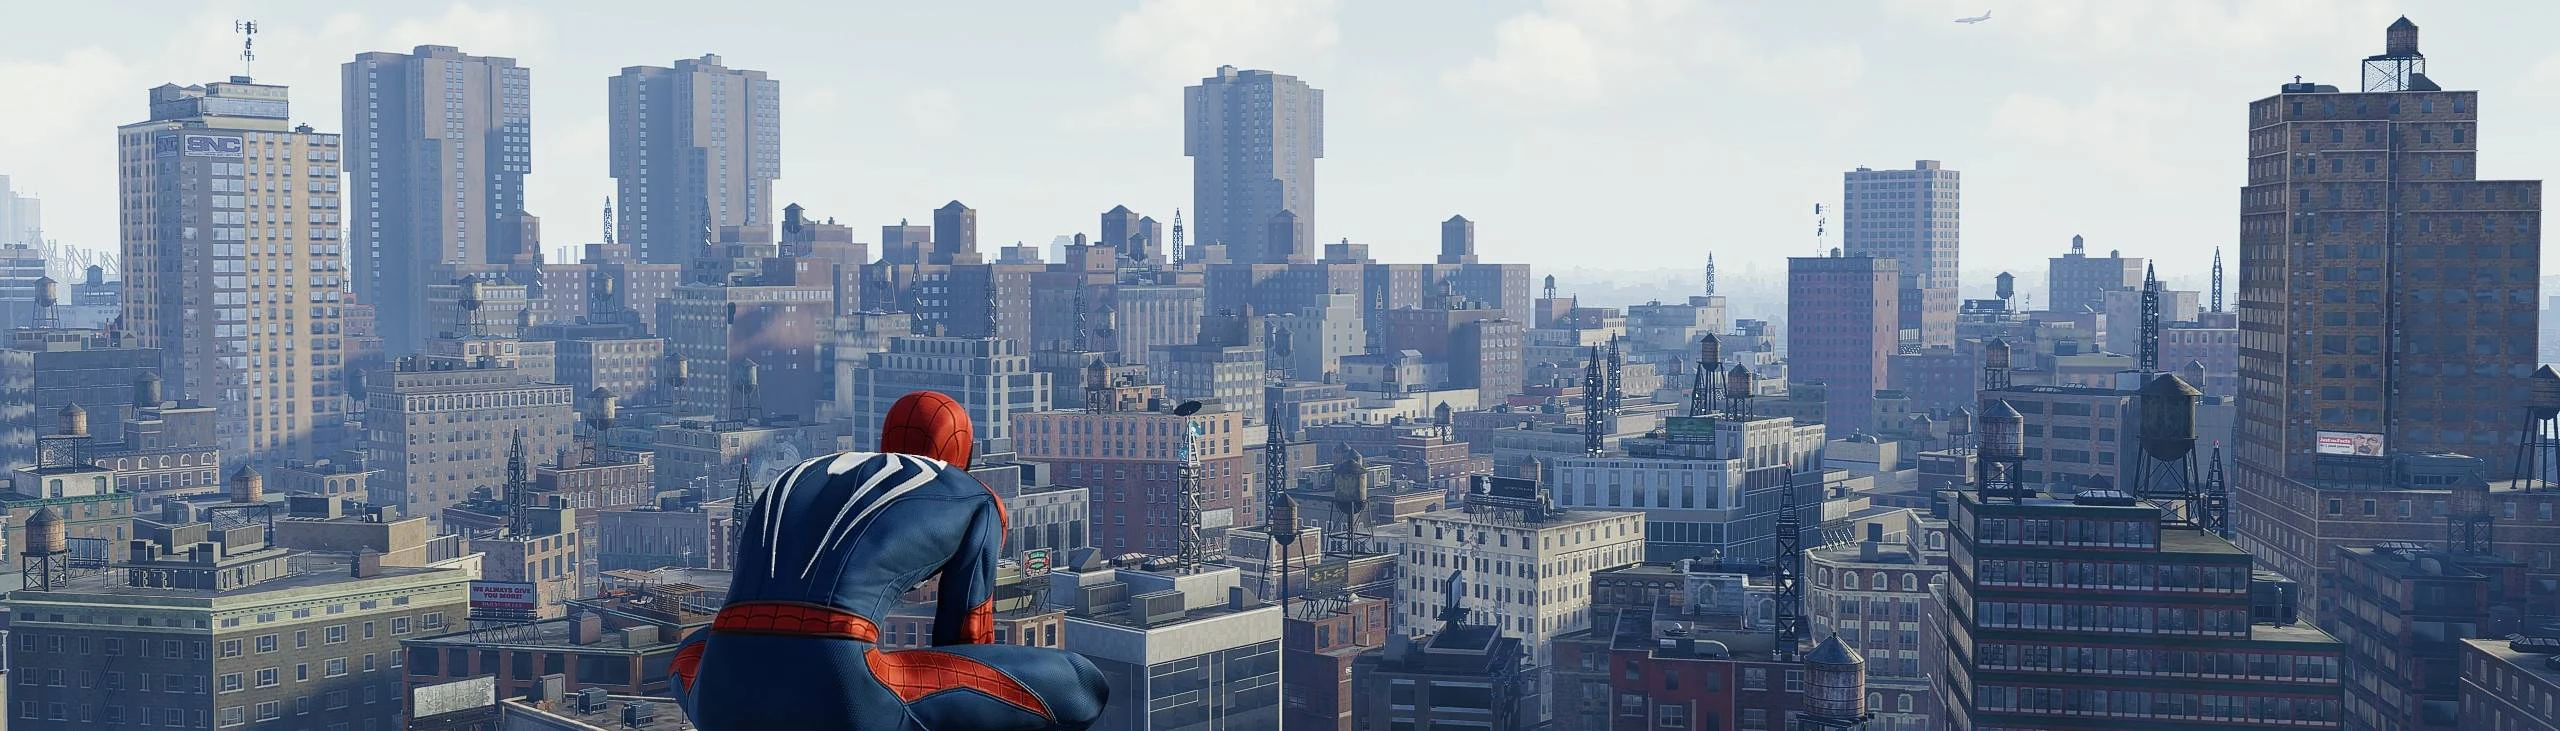 Spider-Man PC Modding Tool at Marvel's Spider-Man Remastered Nexus - Mods  and community